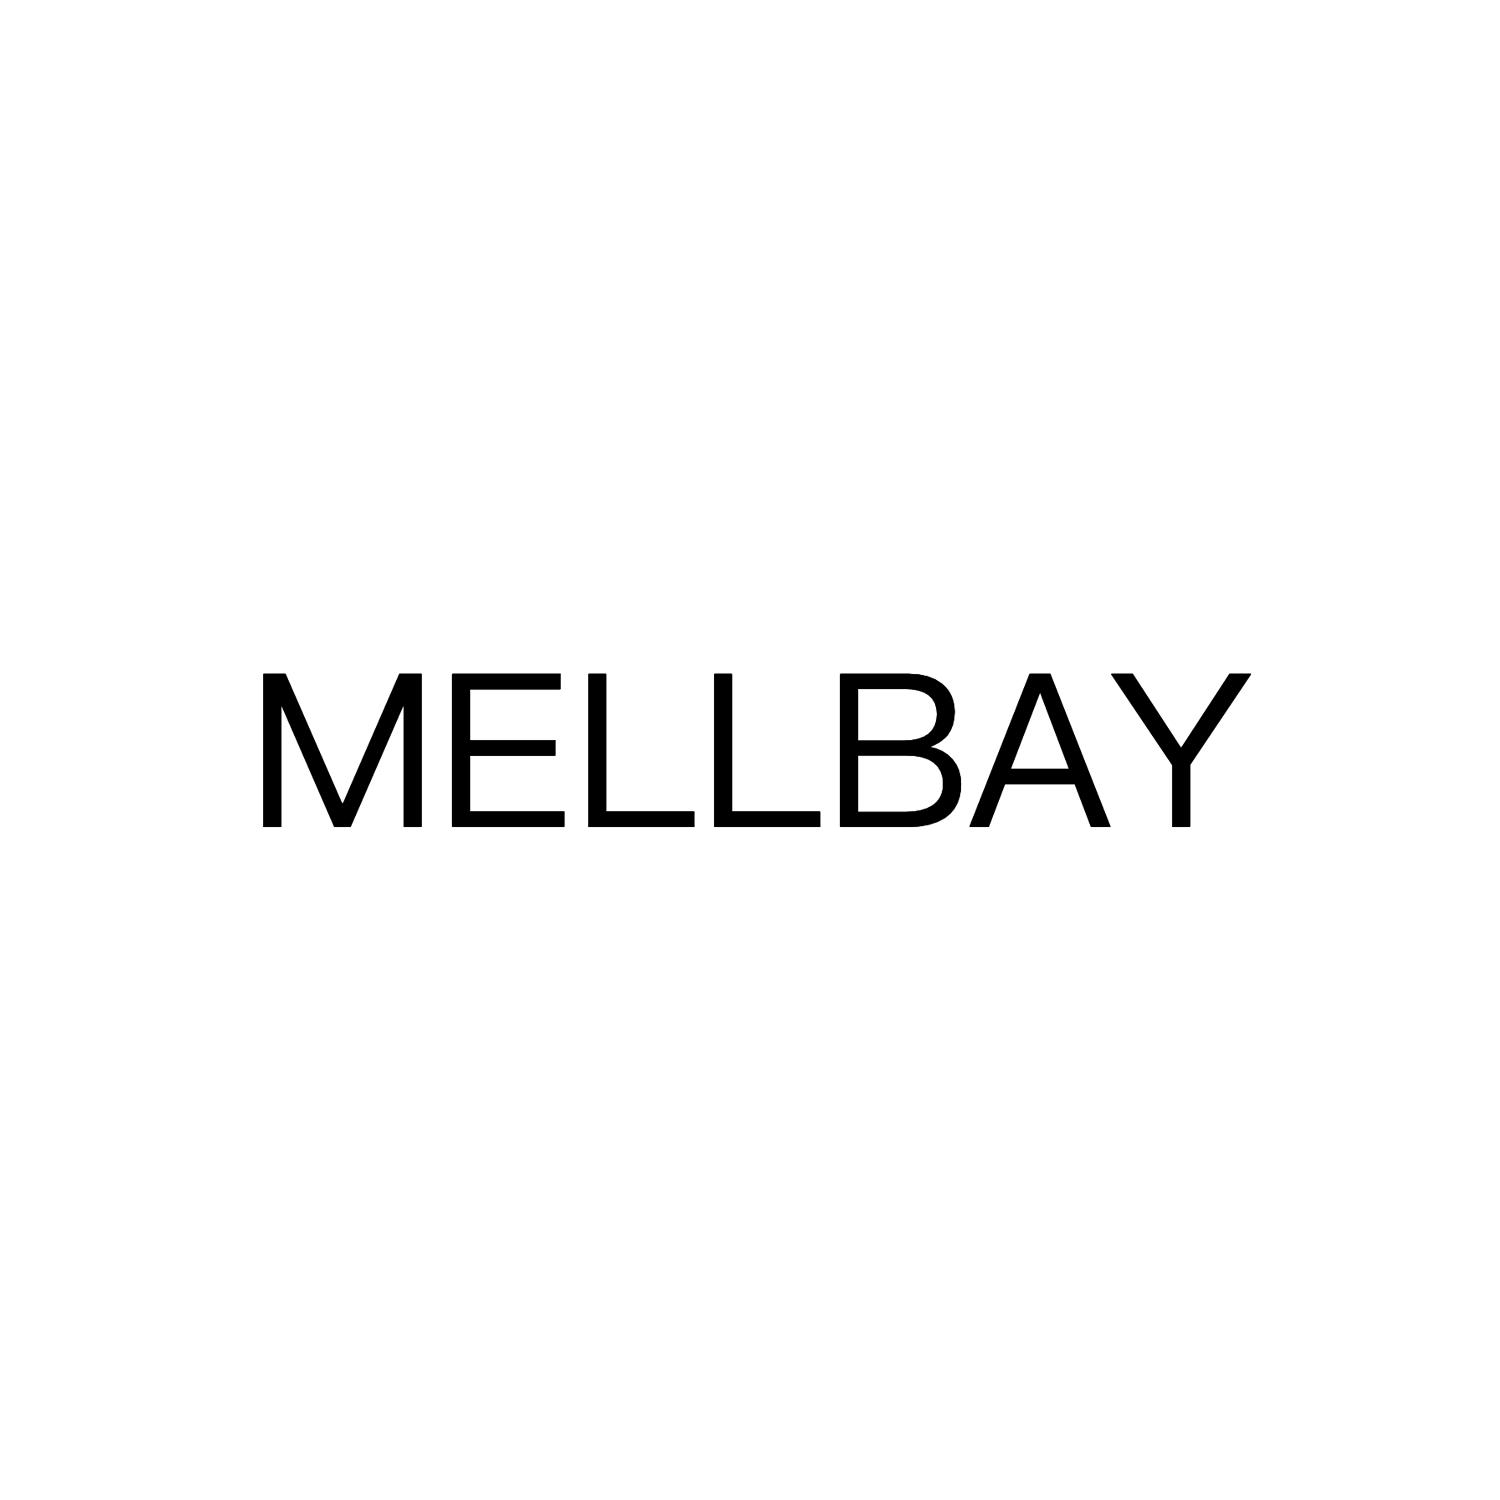 MELLBAY 商标公告